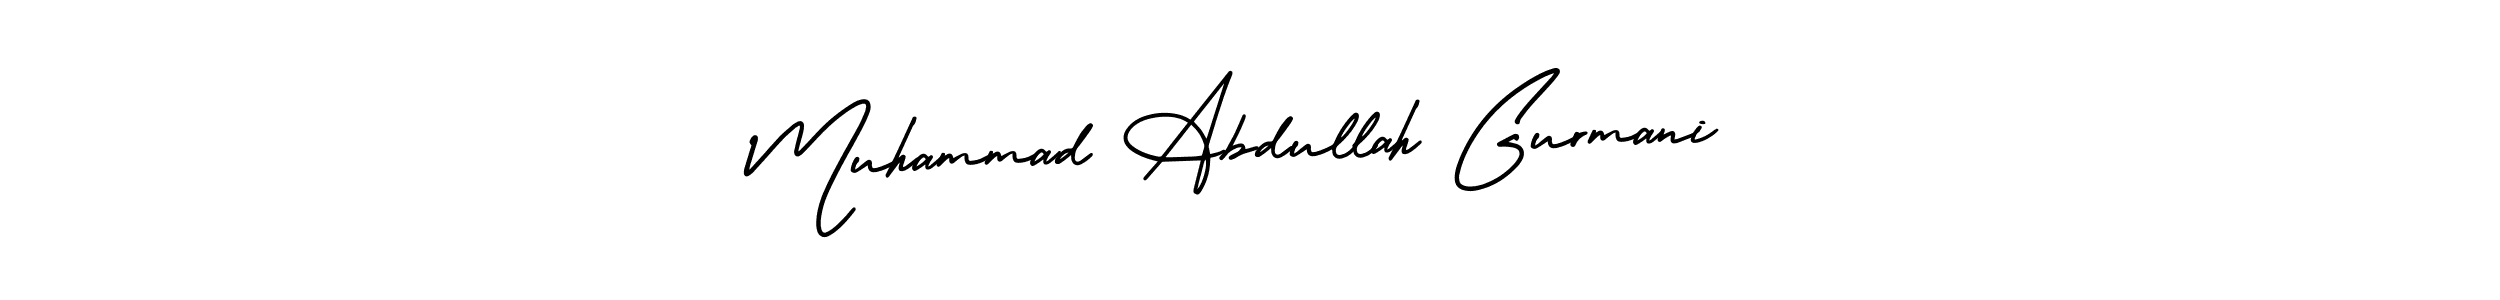 Best and Professional Signature Style for Muhammad Abdullah Gurmani. AmerikaSignatureDemo-Regular Best Signature Style Collection. Muhammad Abdullah Gurmani signature style 3 images and pictures png